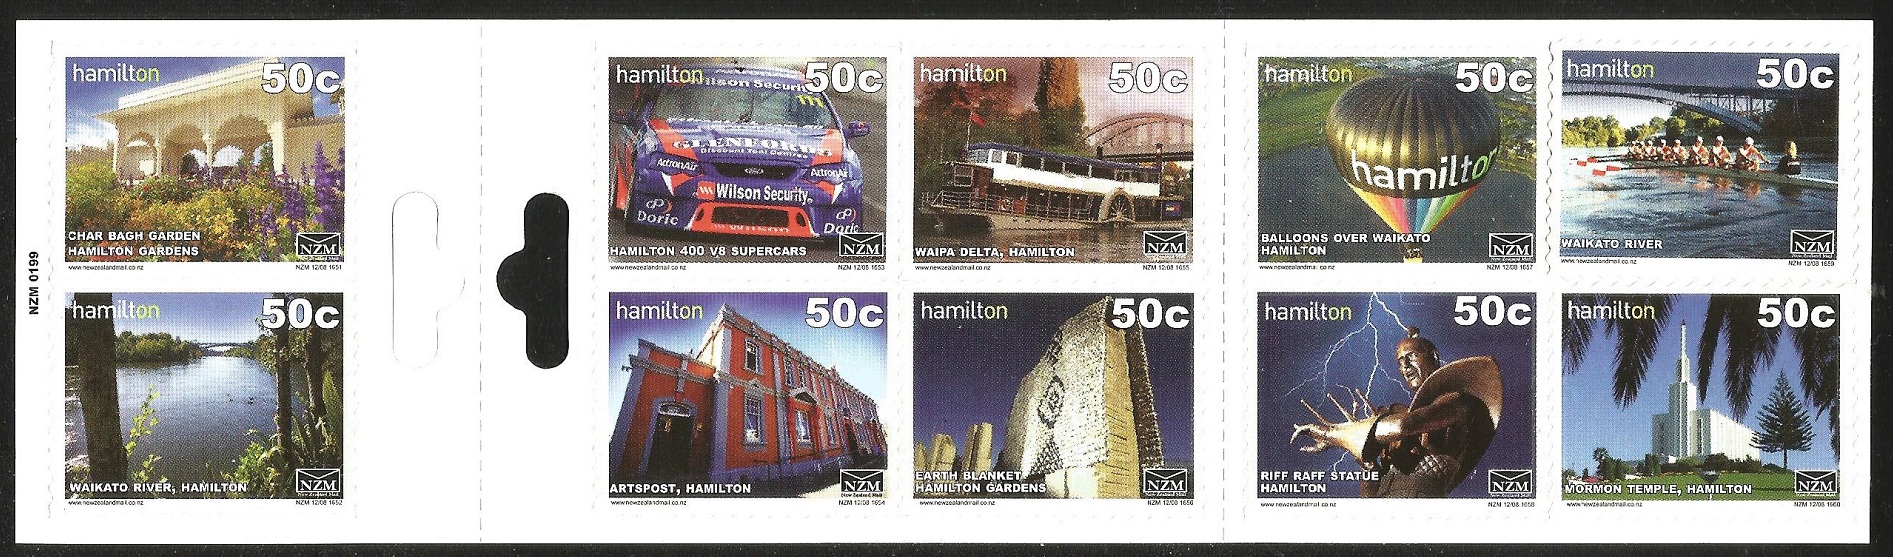 Stamp NZL Hamilton booklet front